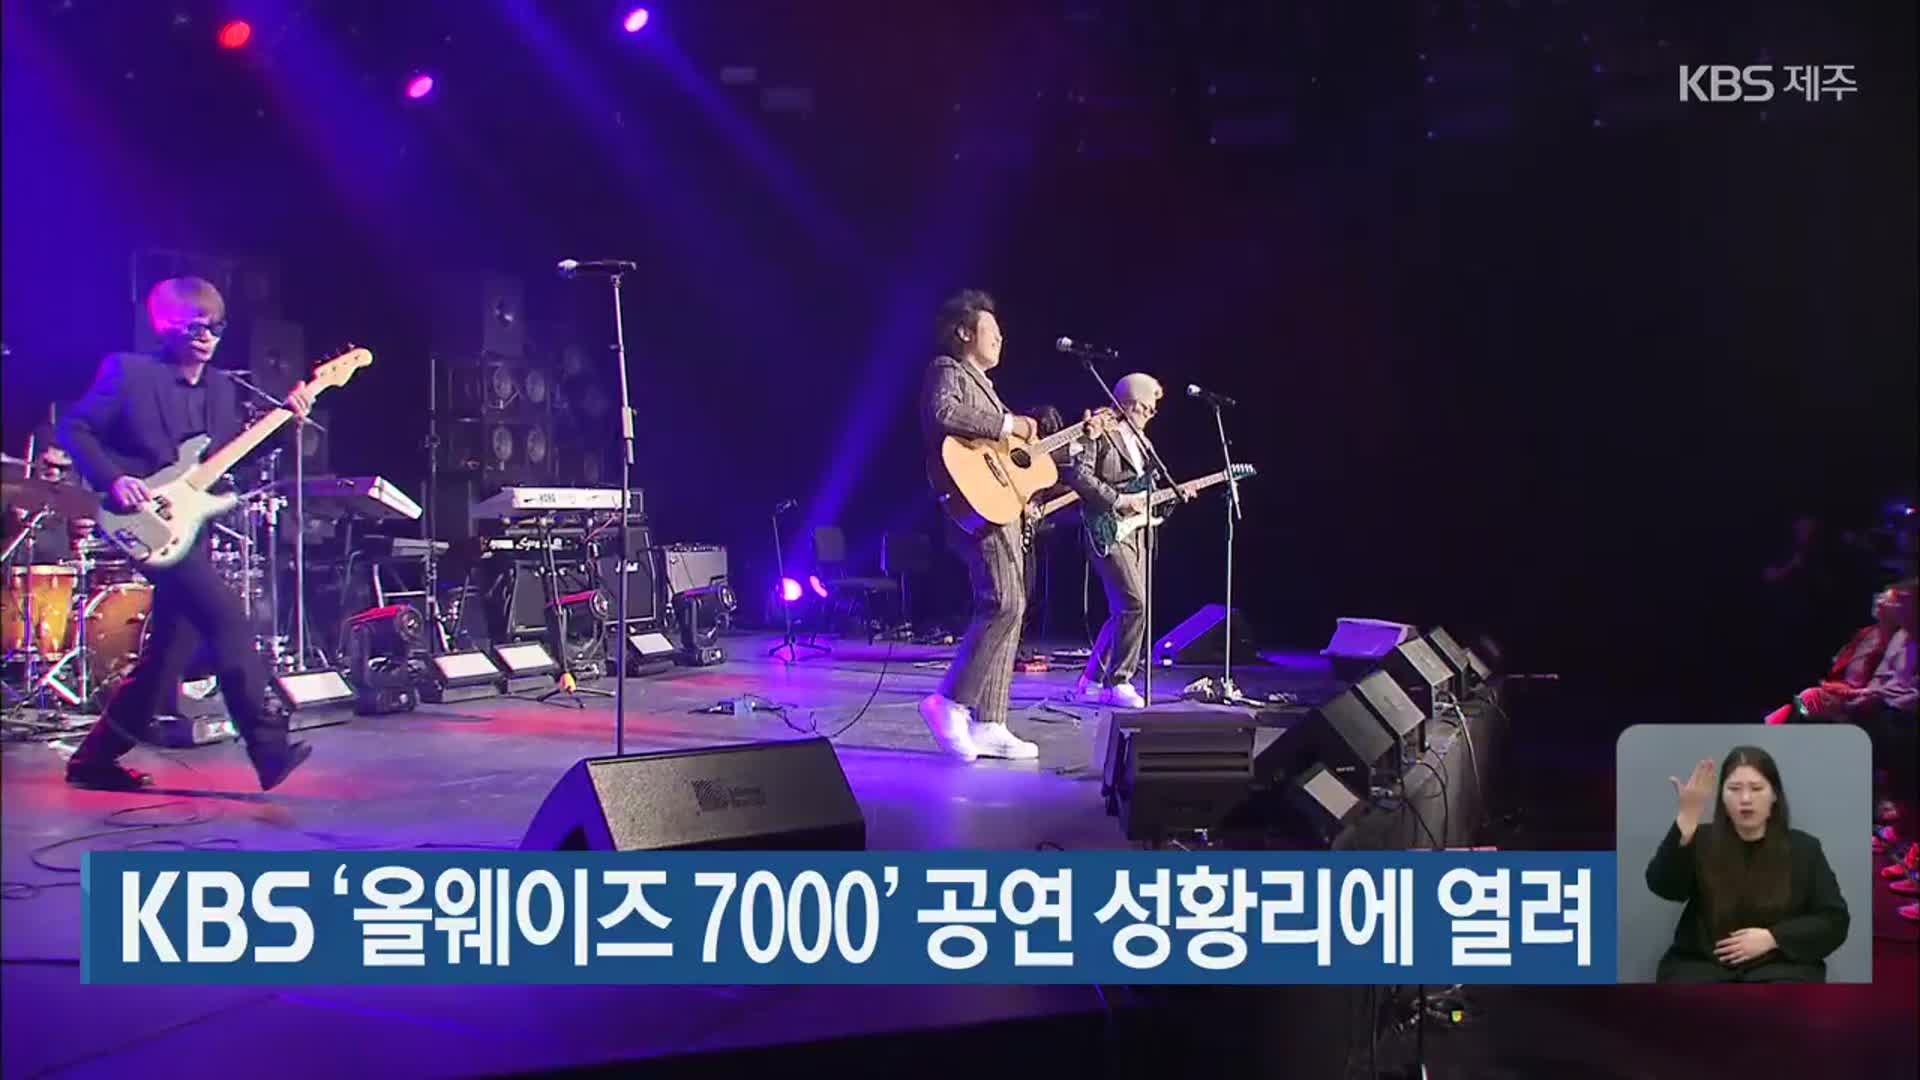 KBS ‘올웨이즈 7000’ 공연 성황리에 열려